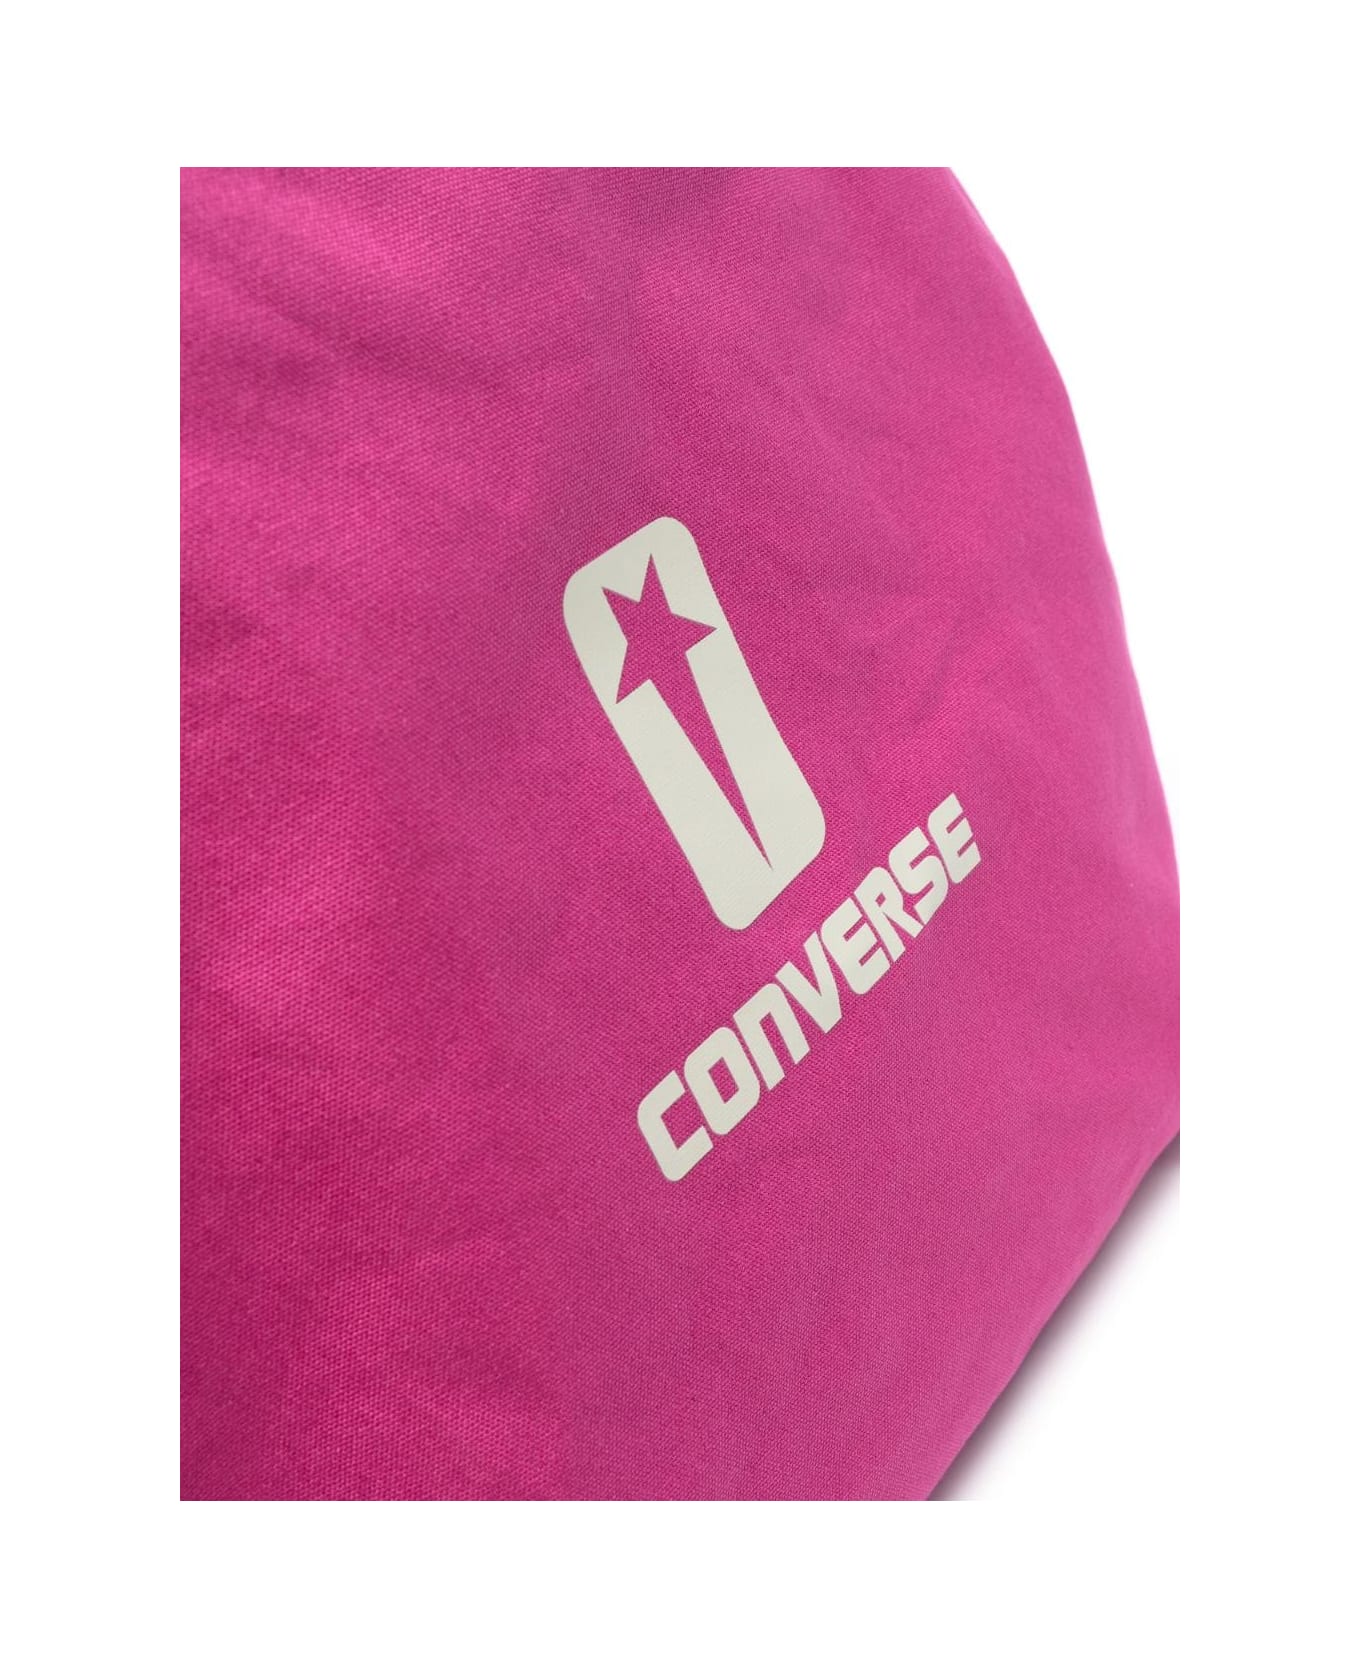 Converse Tote - Hot Pink